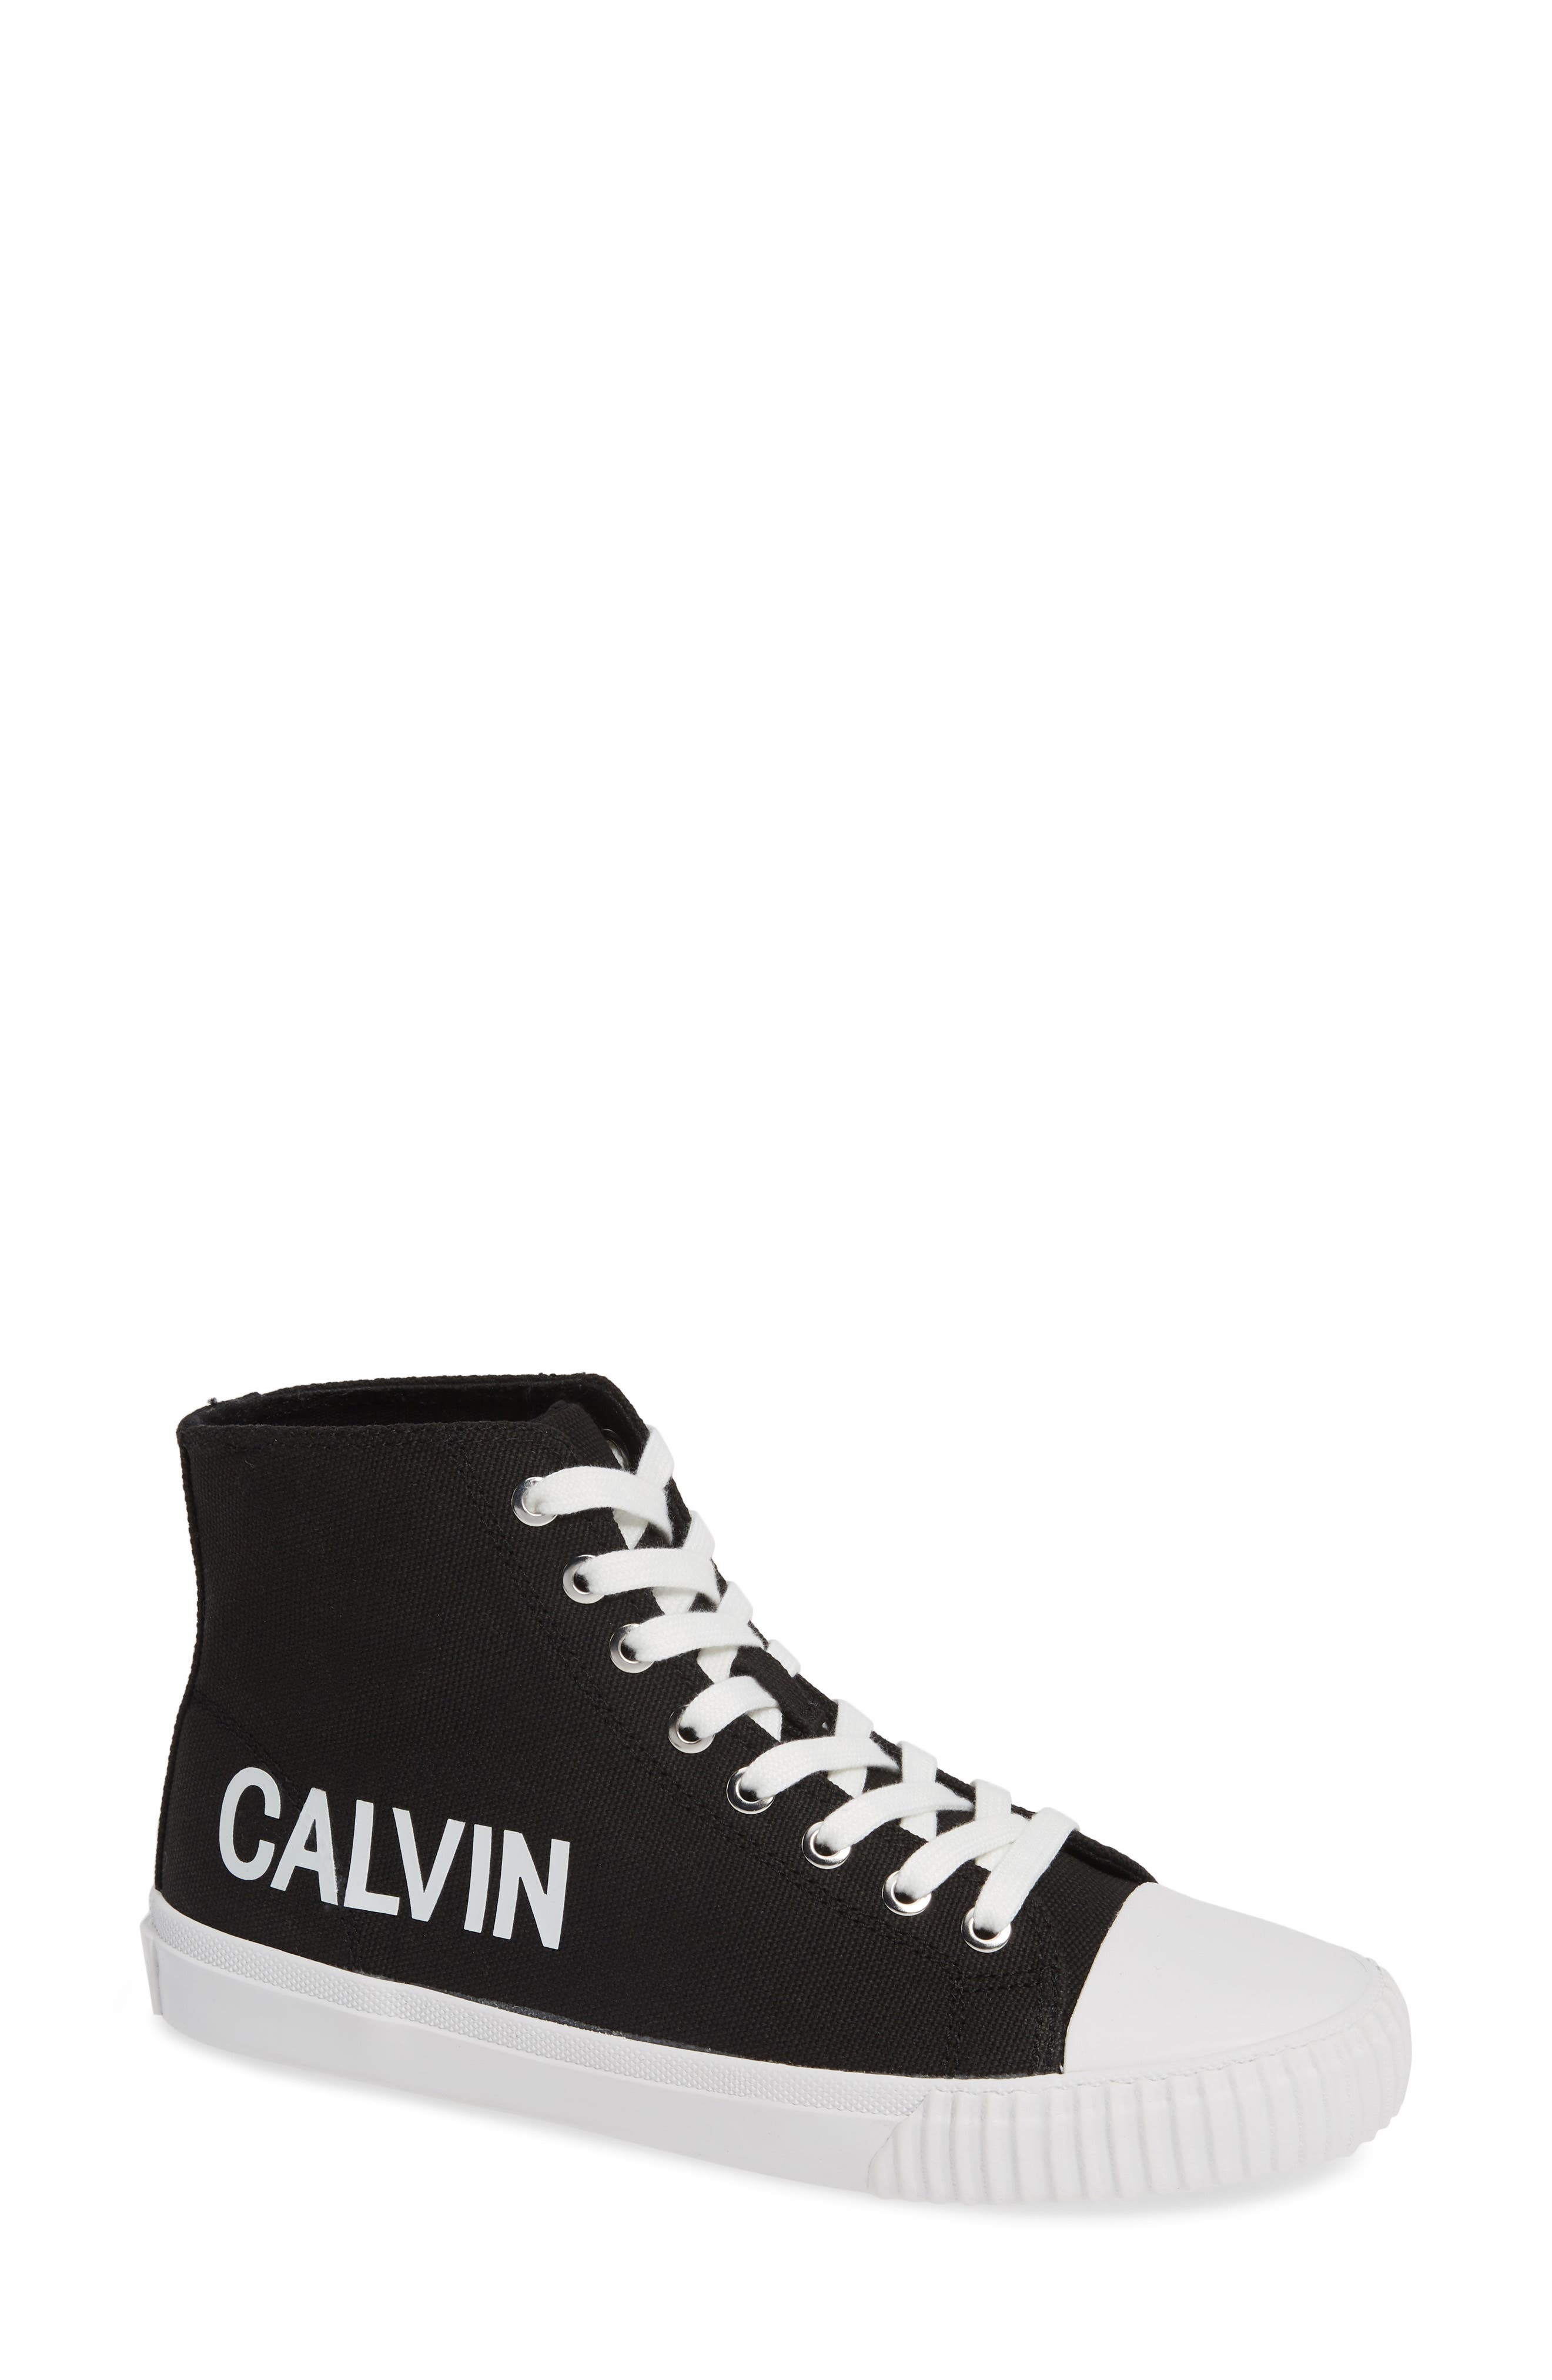 calvin klein jeans high top sneakers